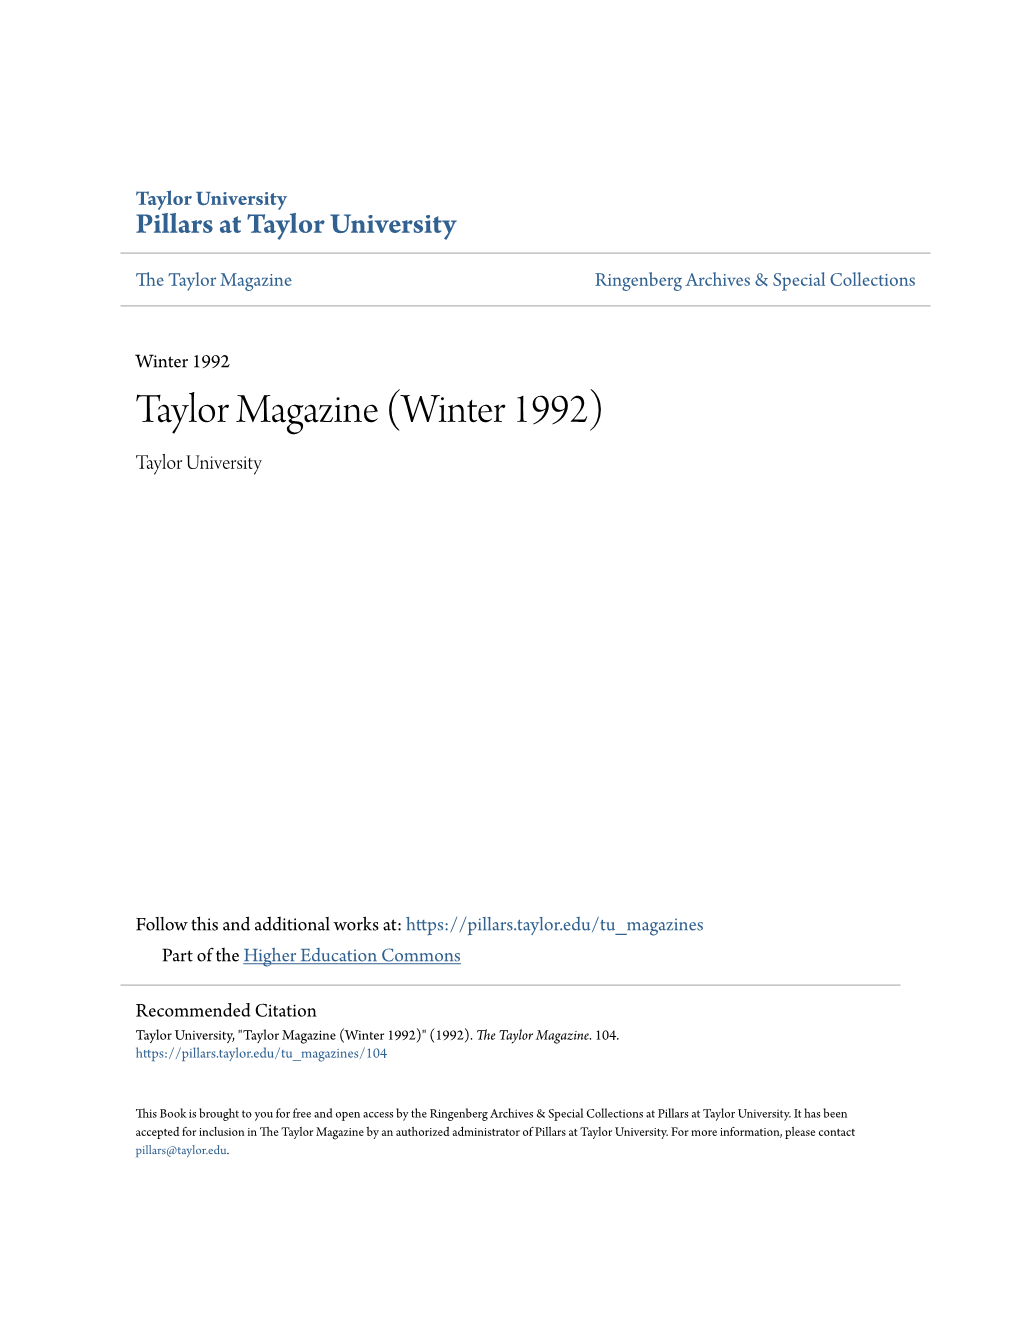 Taylor Magazine (Winter 1992) Taylor University